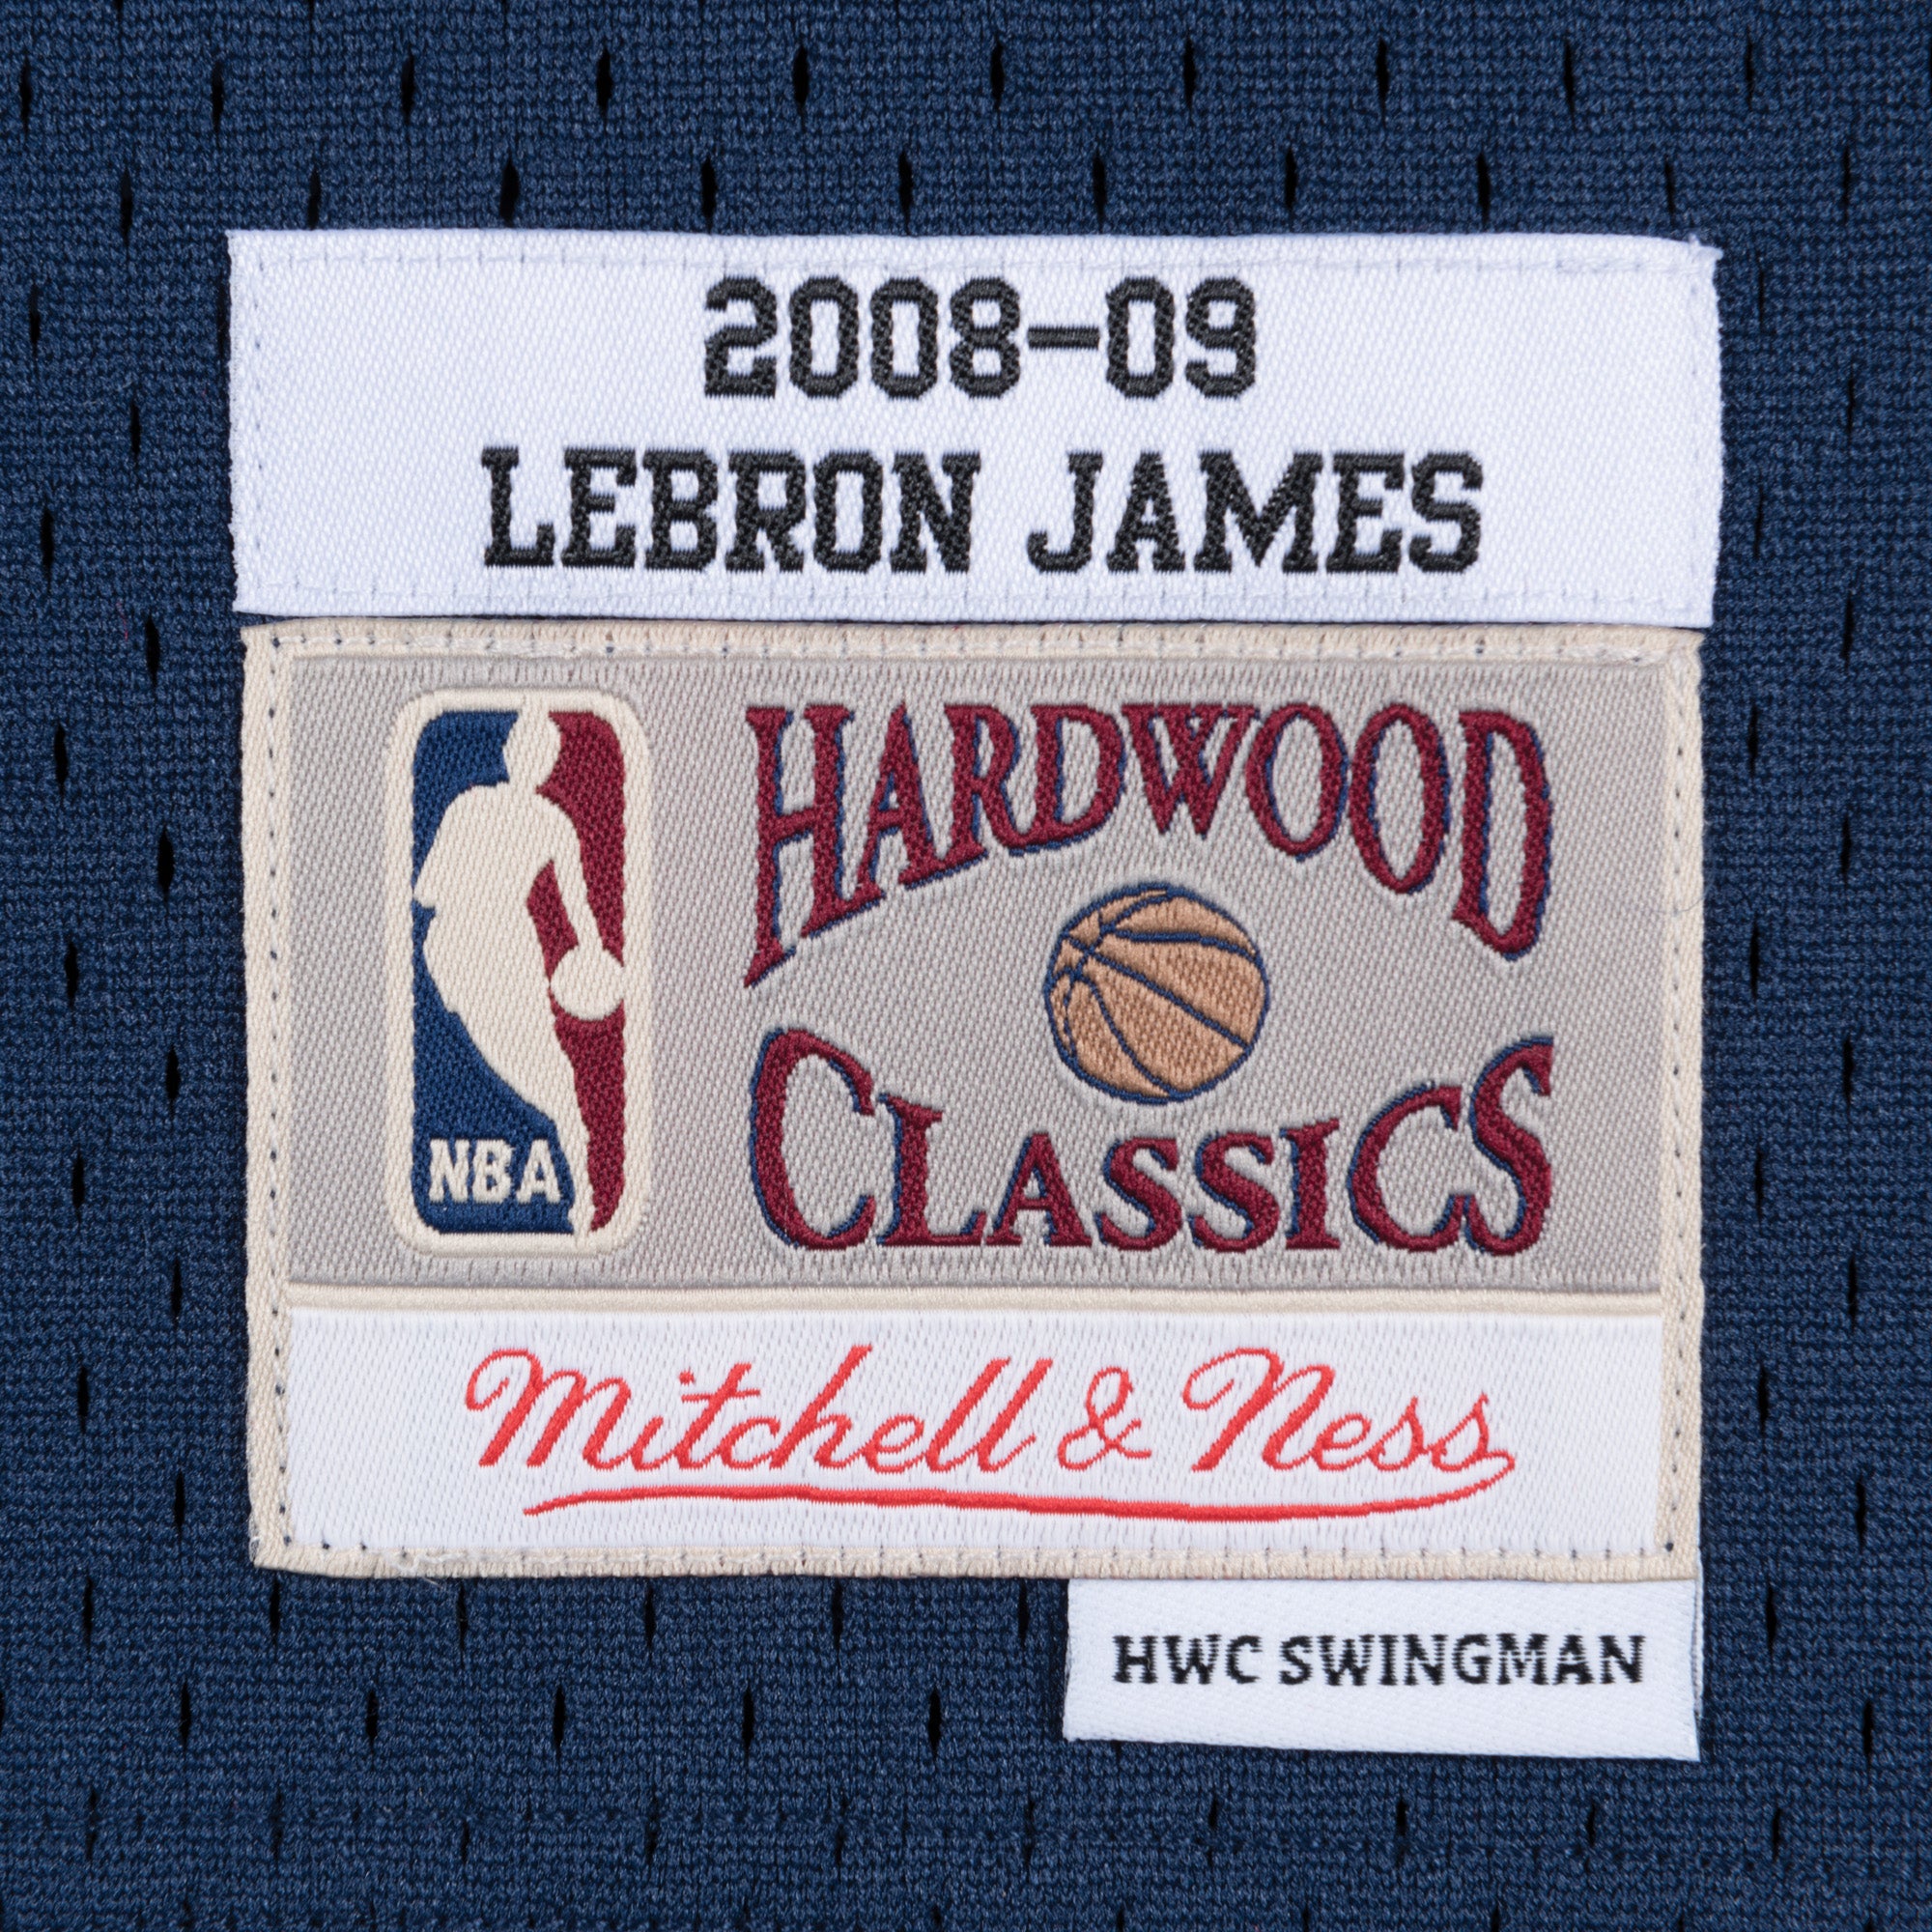 LeBron James Men's XL Cleveland Cavaliers Nike Swingman Throwback Rookie  Jersey